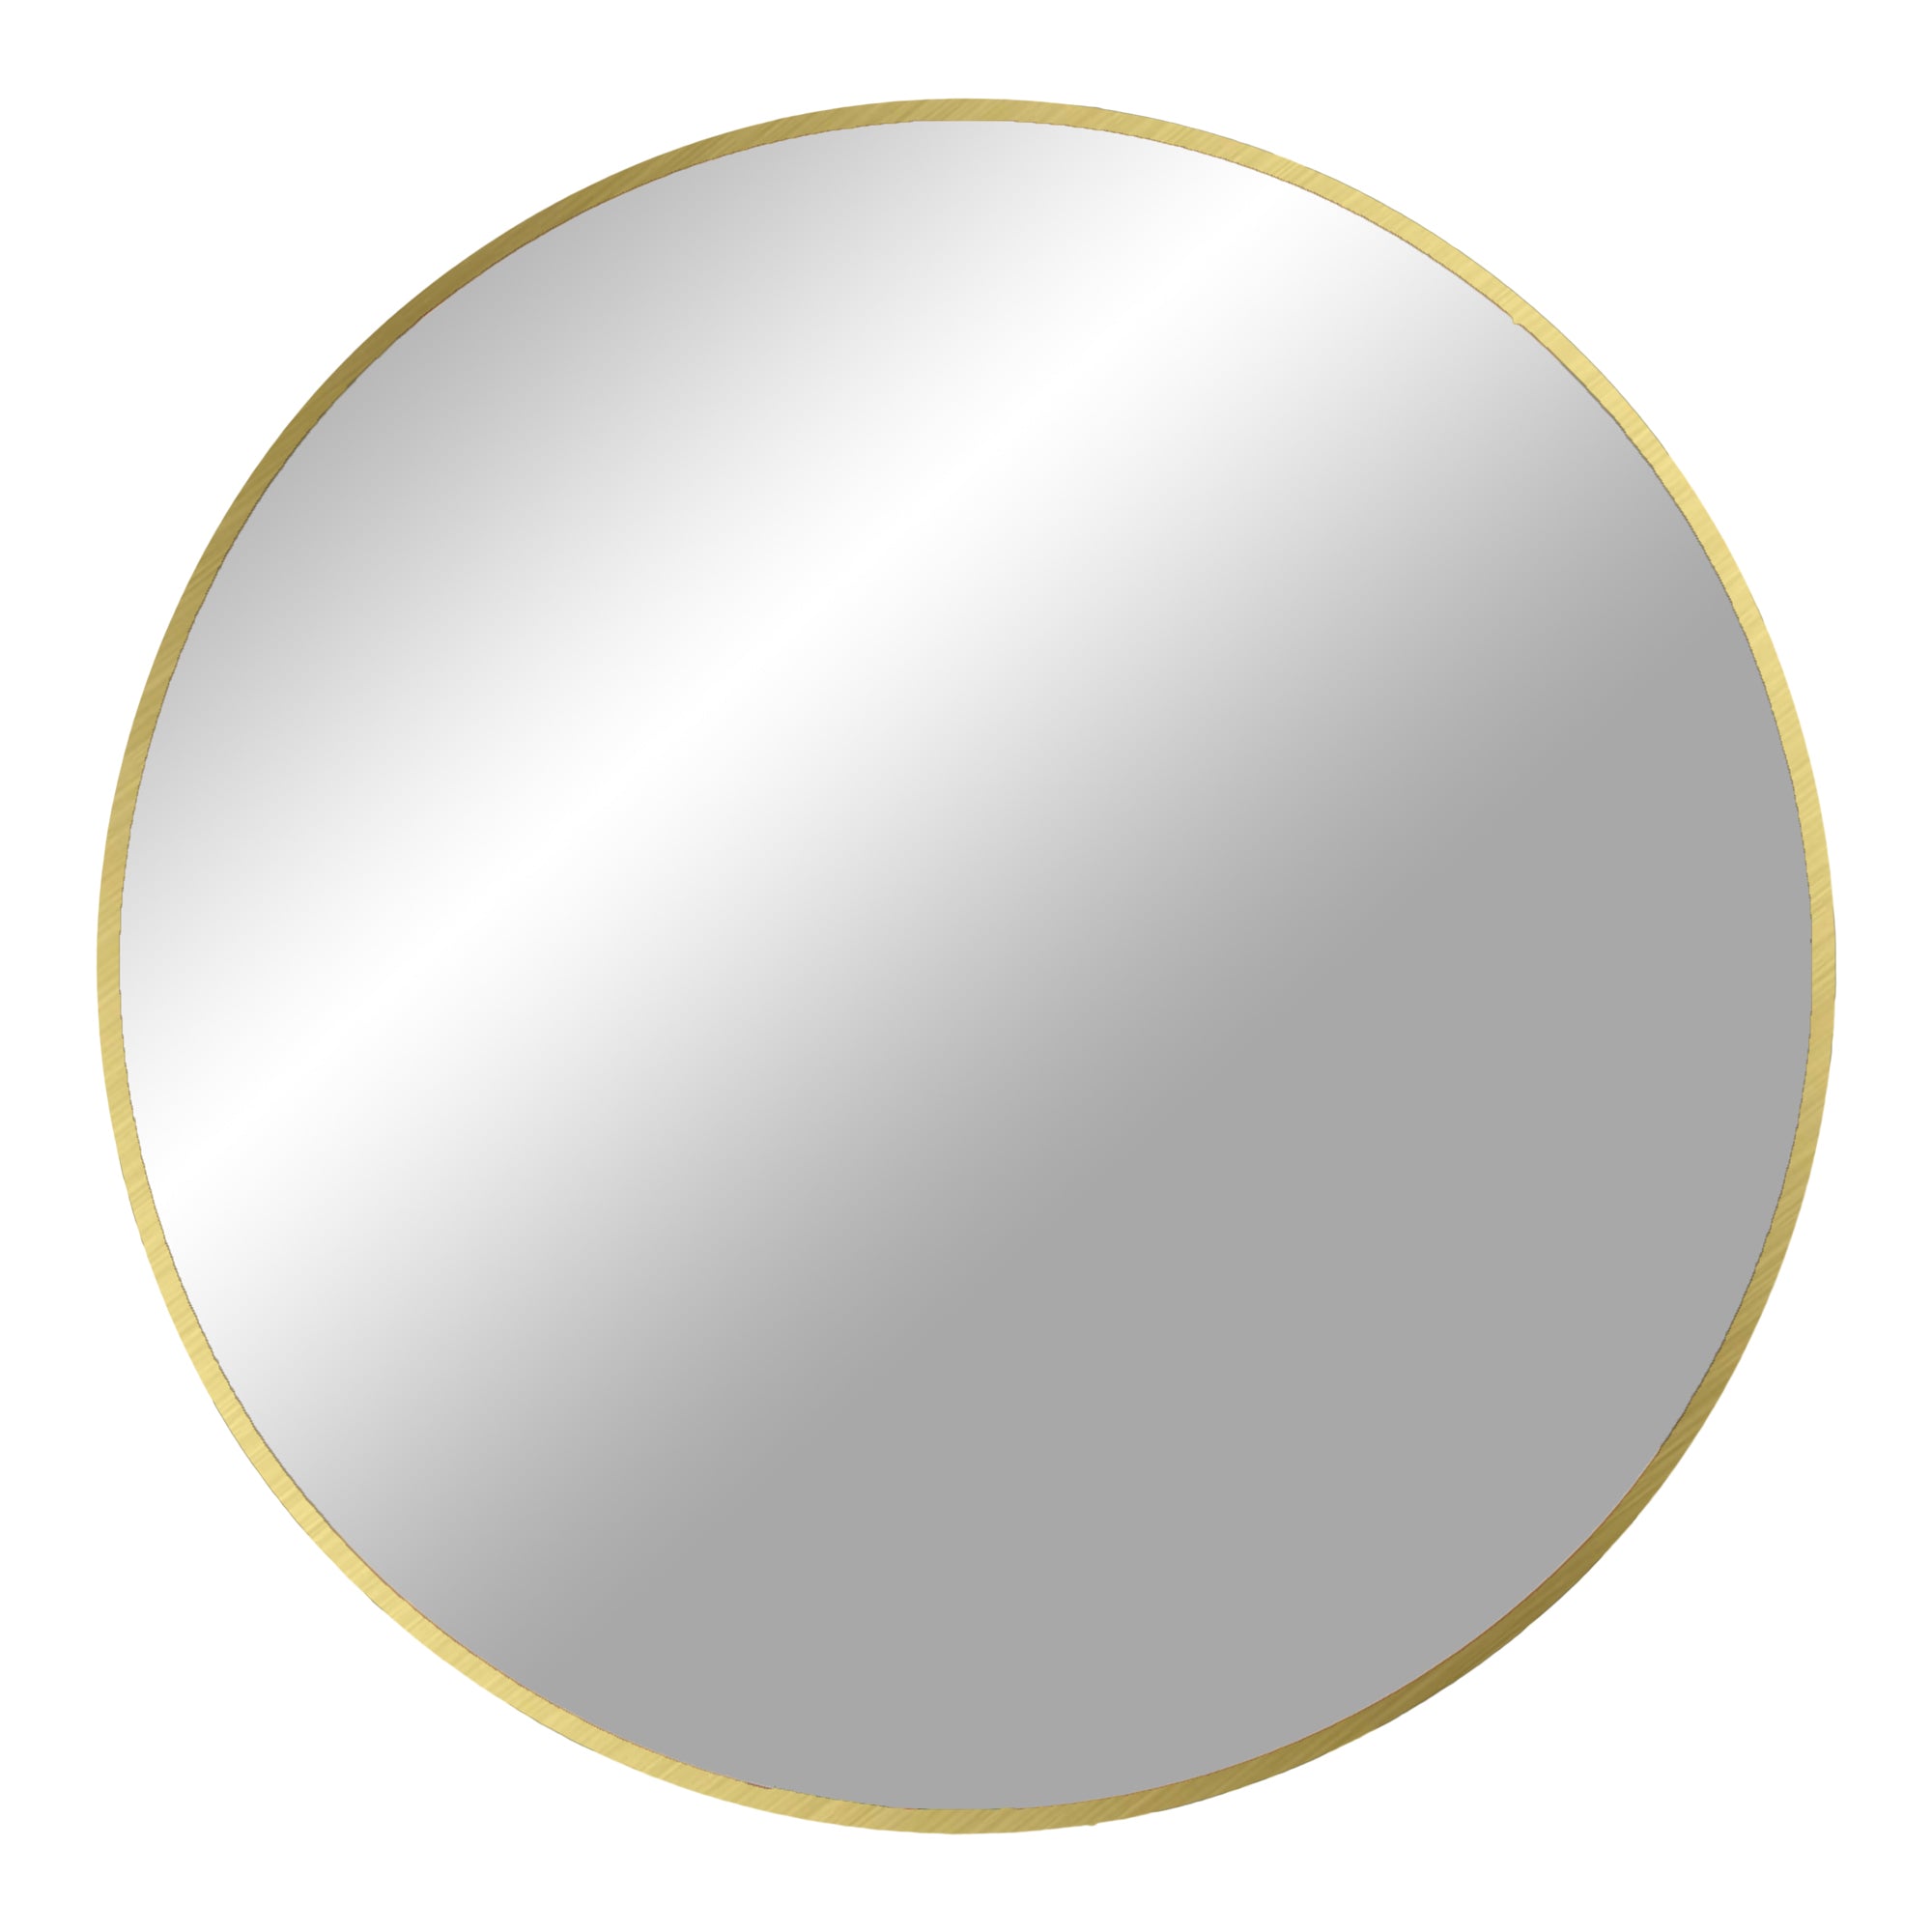 16: Madrid Spejl - Spejl i aluminium, messing look, Ø80 cm